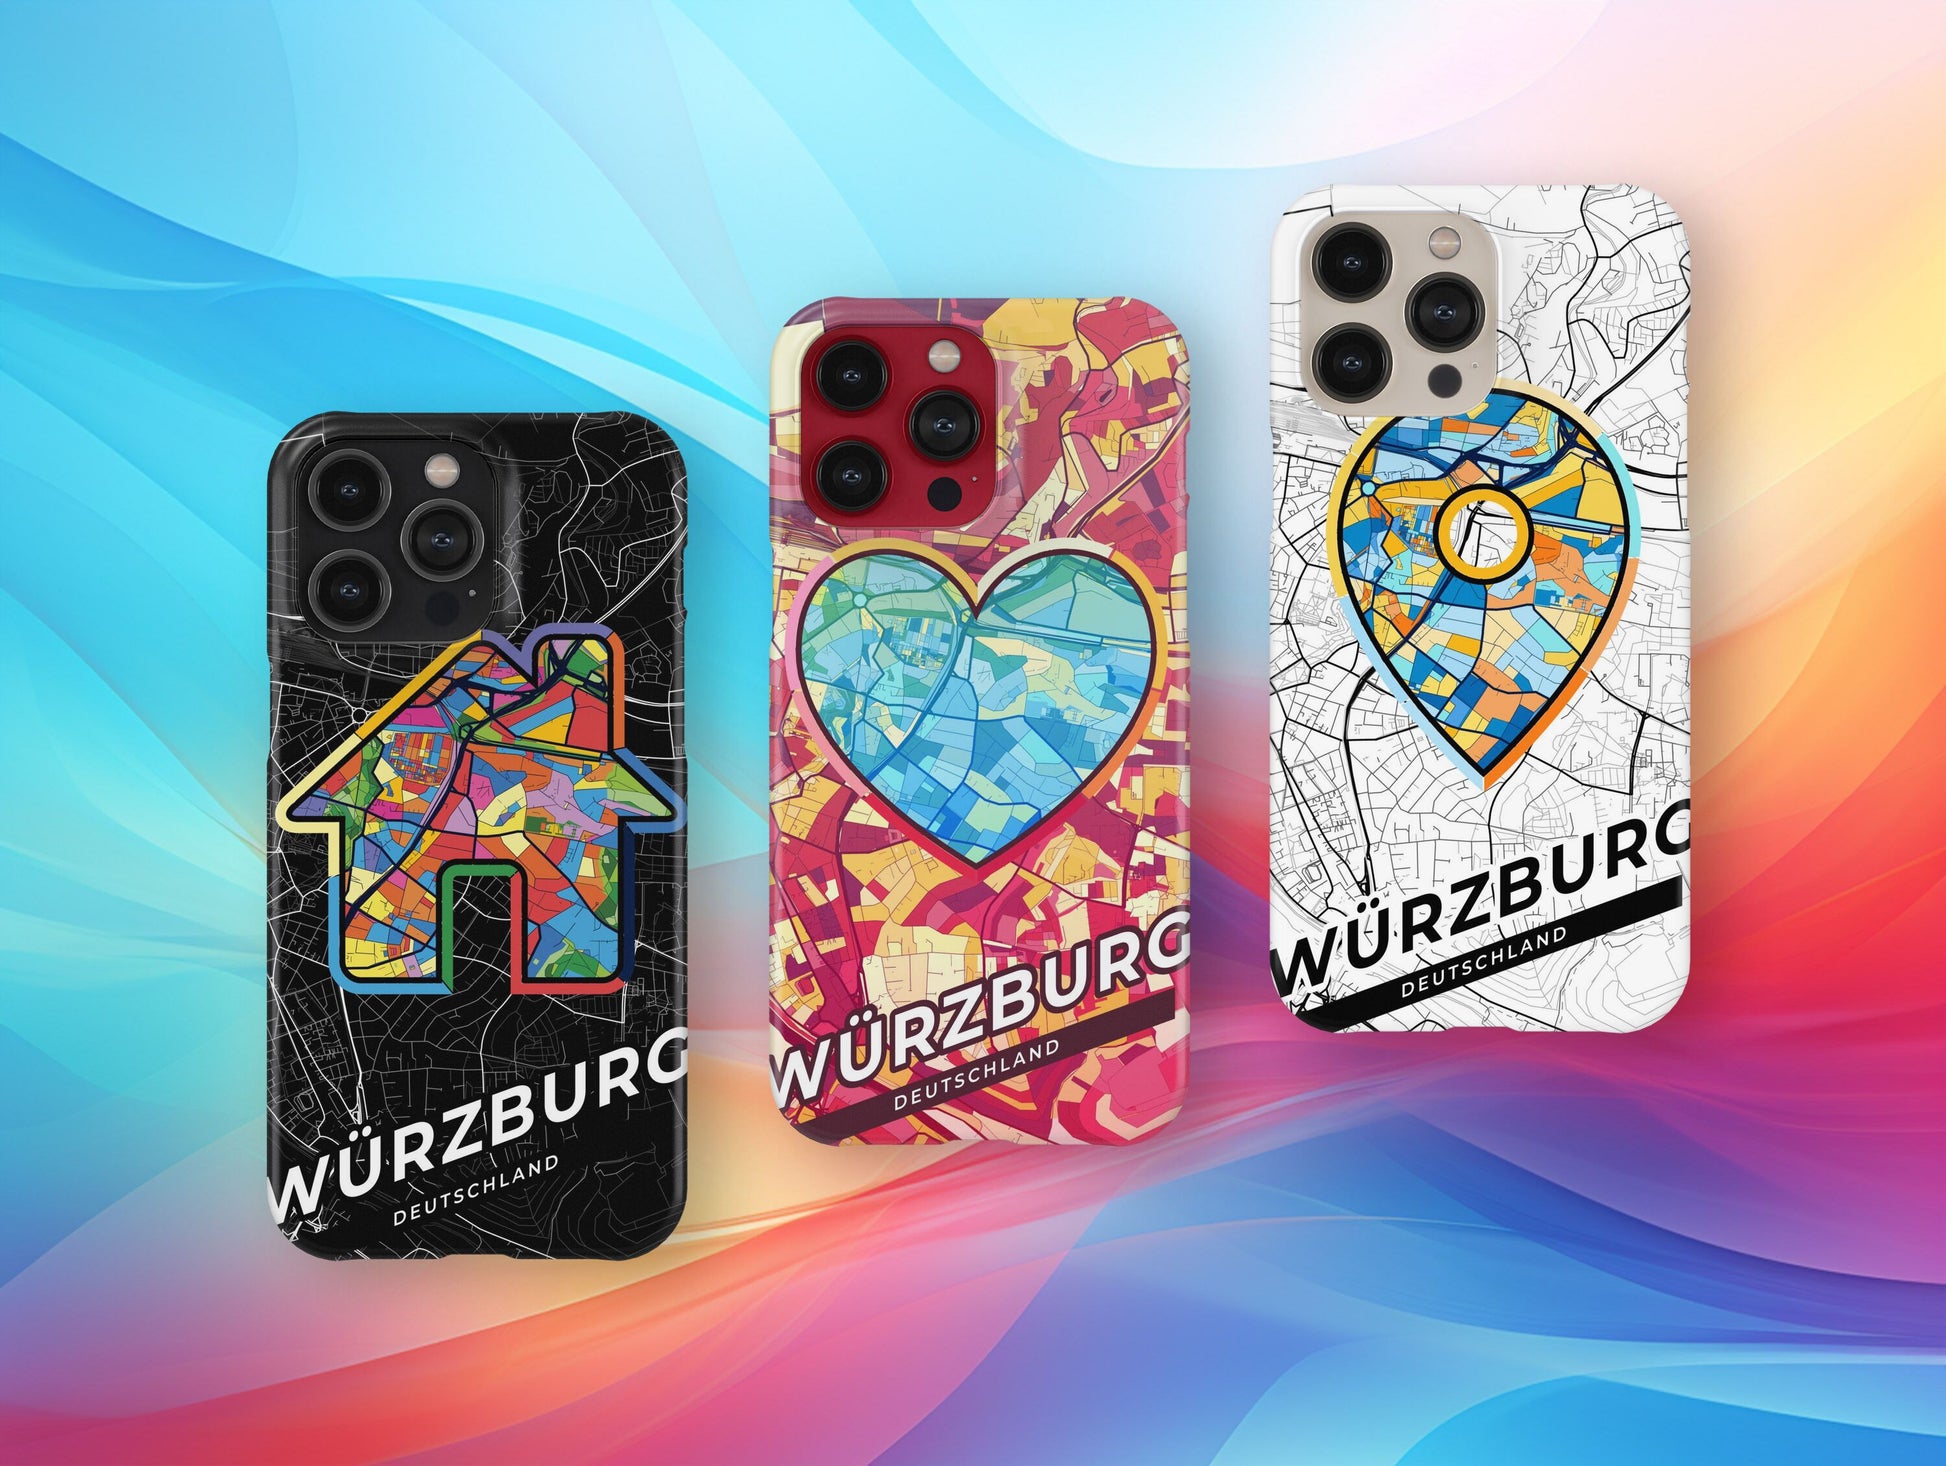 Würzburg Deutschland slim phone case with colorful icon. Birthday, wedding or housewarming gift. Couple match cases.